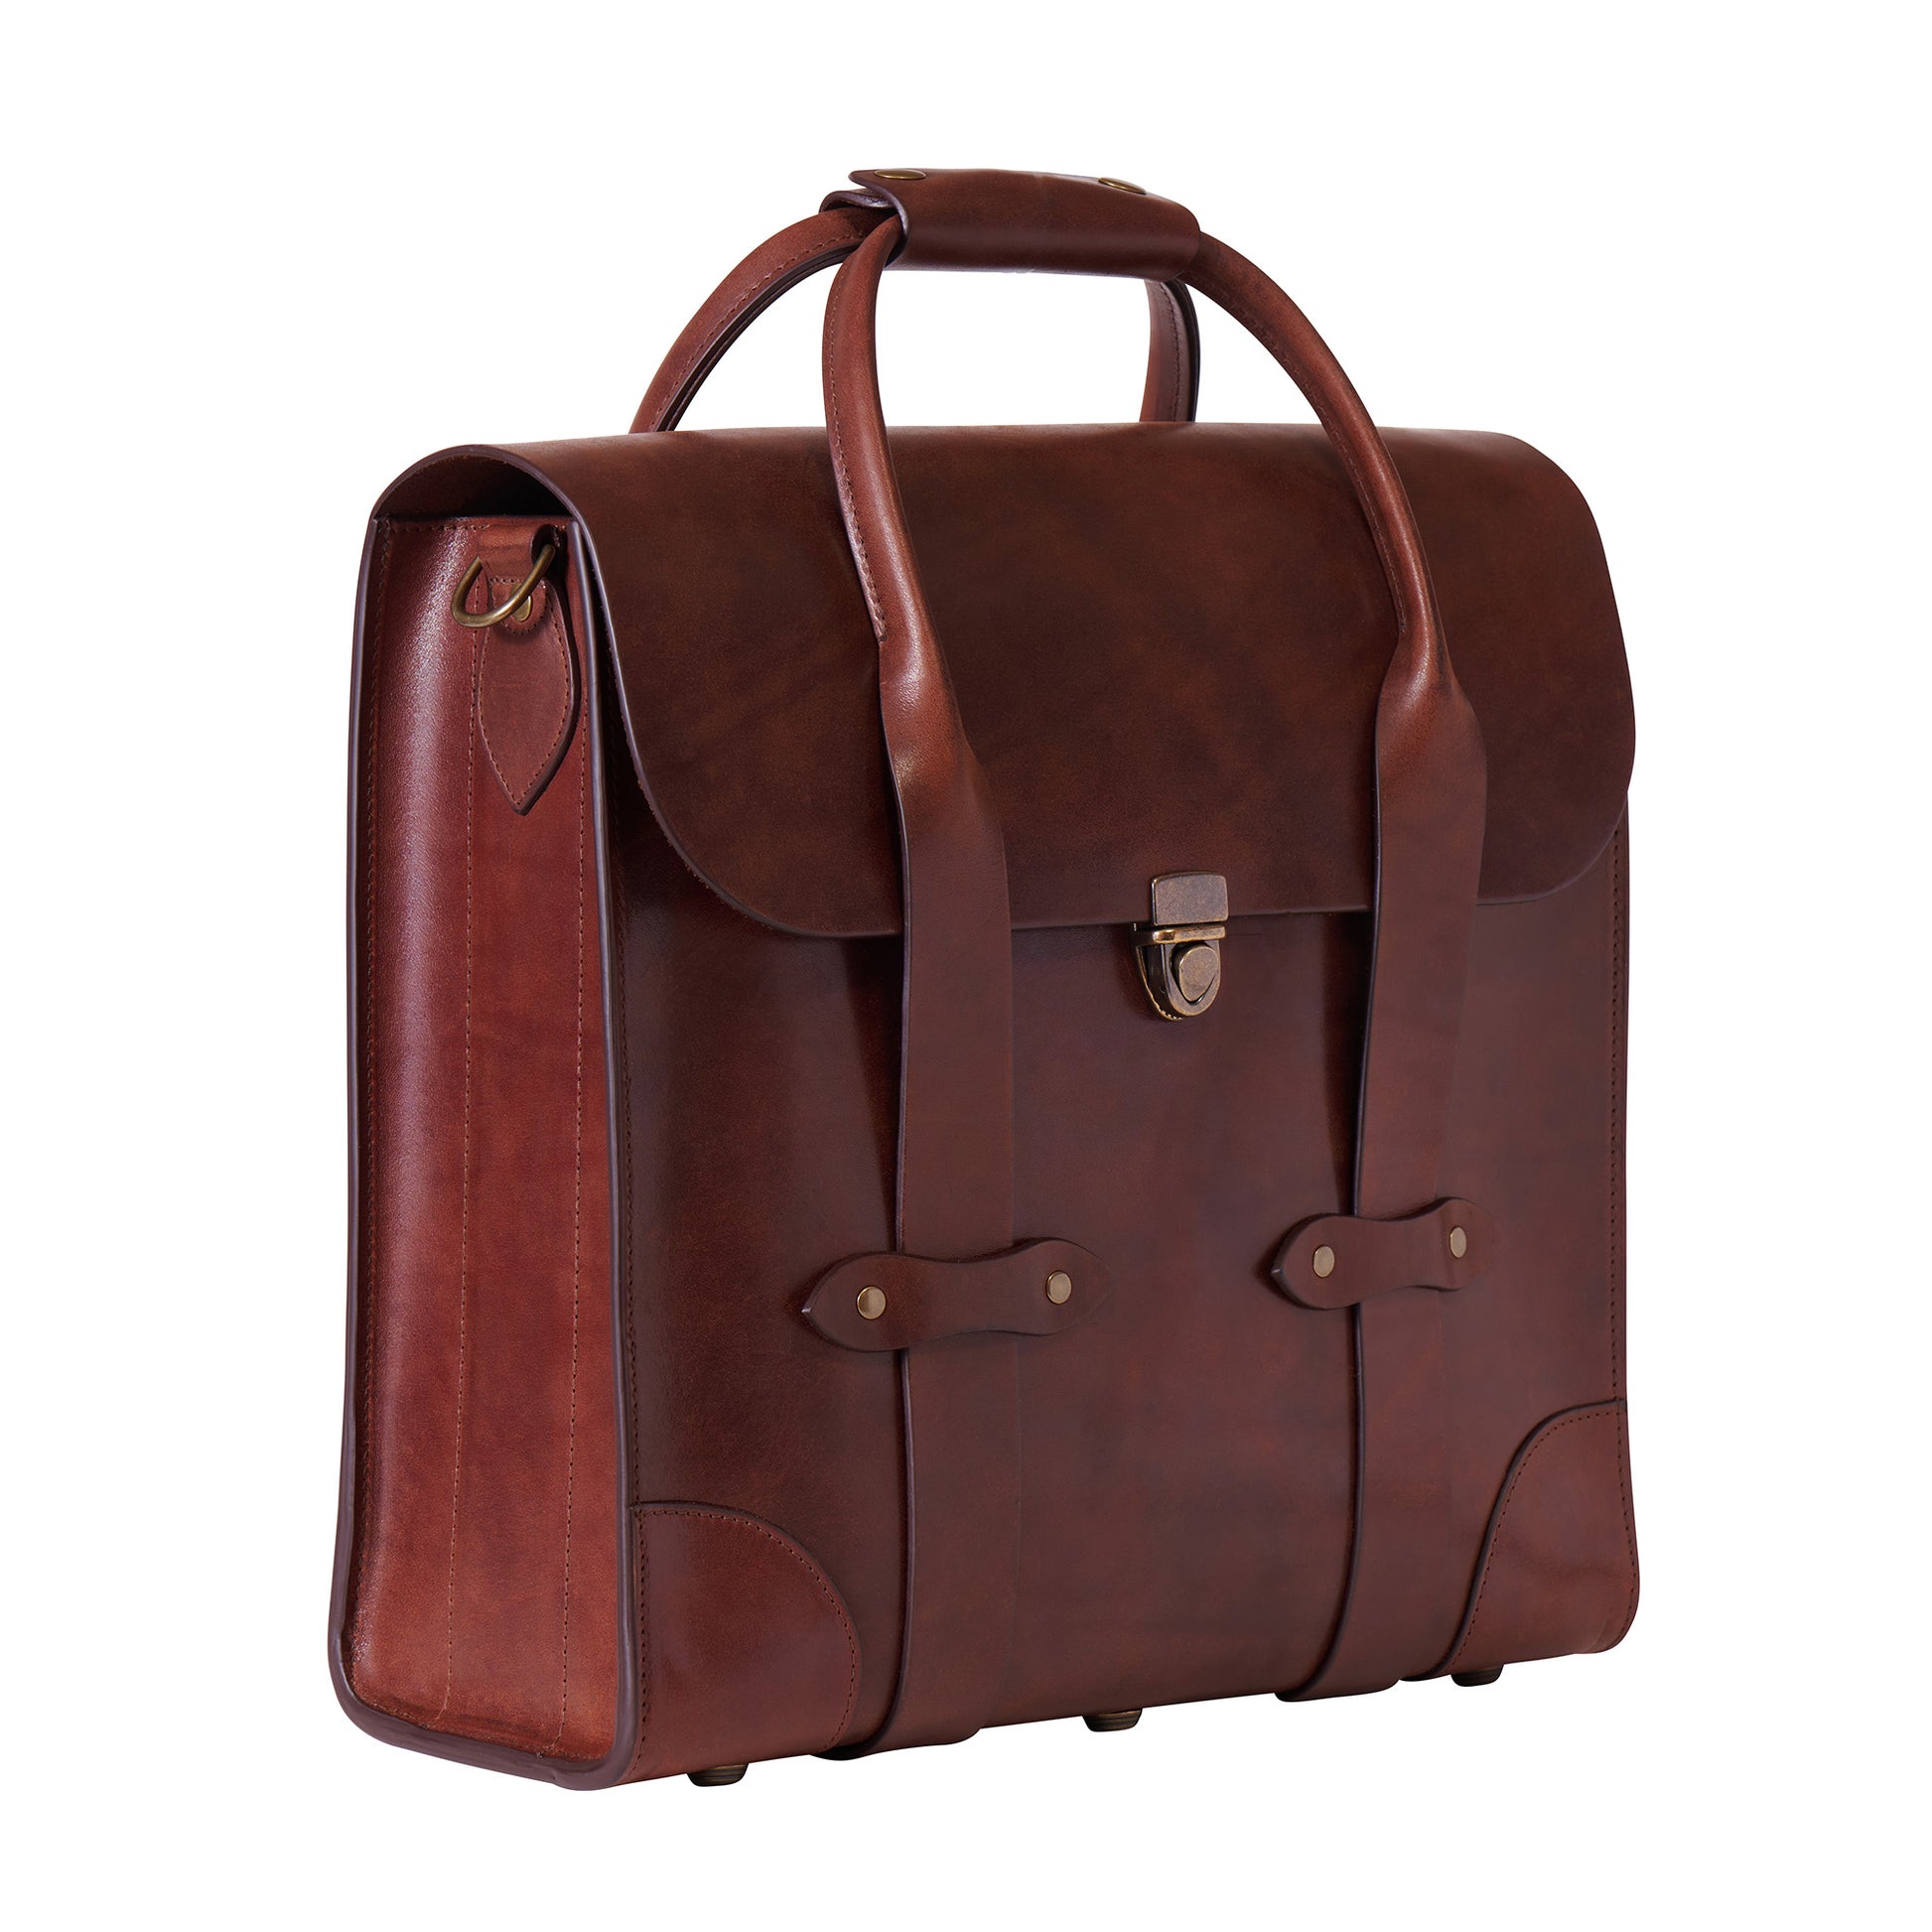 Jackson Wayne leather bourbon bag whiskey bottle carrier in vintage brown full grain vegetable tanned leather